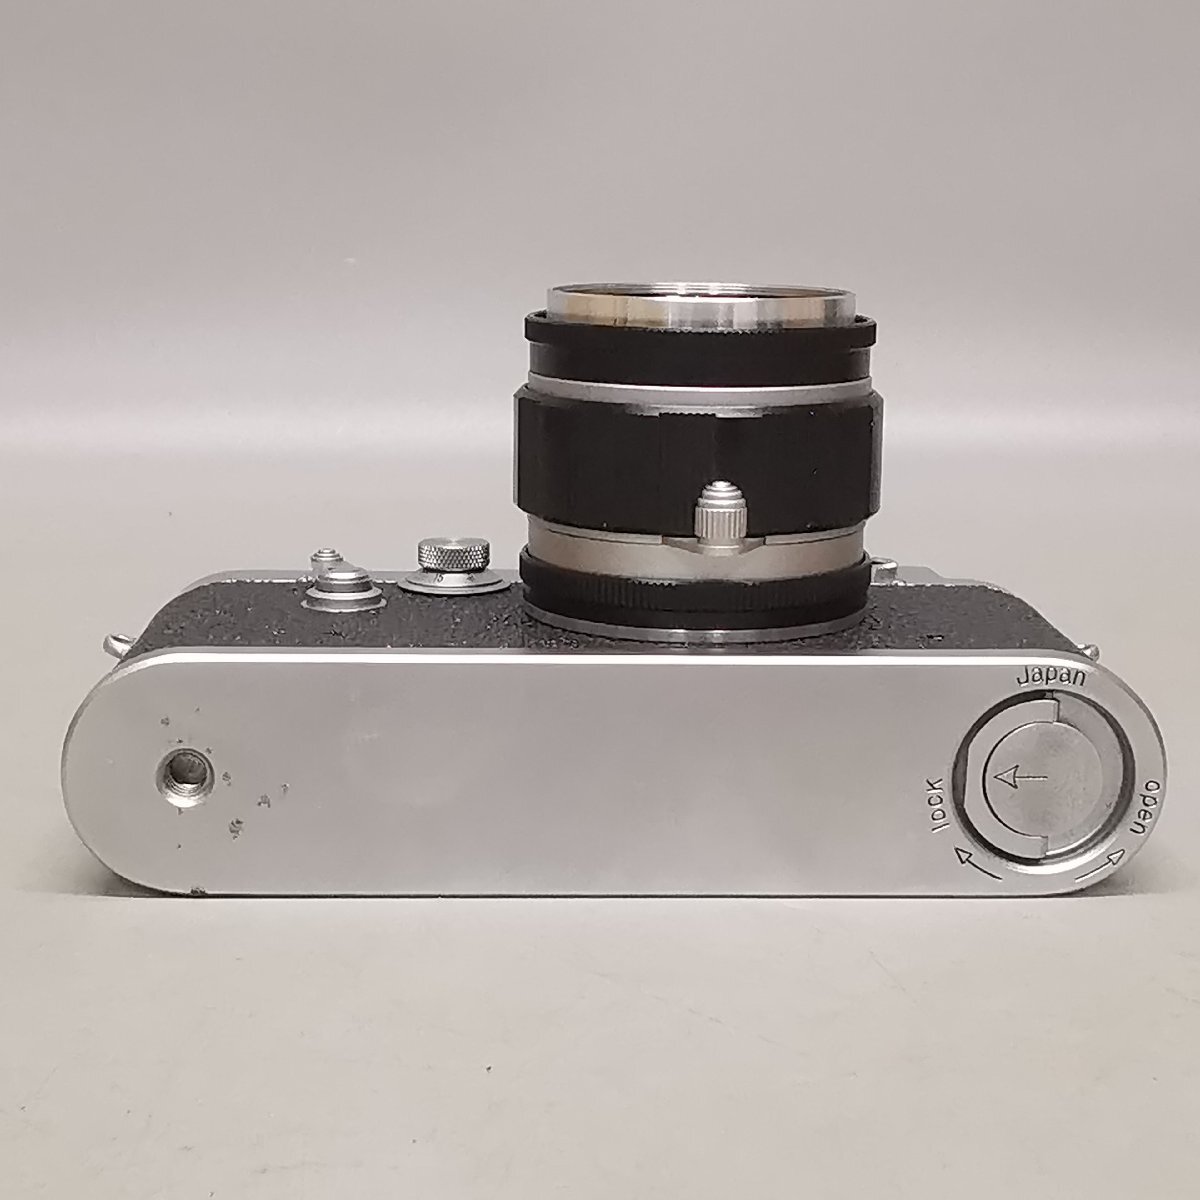 LEOTAX レオタックス FV / Tokyo Kogaku Topcor-S F2 5cm レンジファインダーカメラ ケース付 現状品 Z5678の画像5